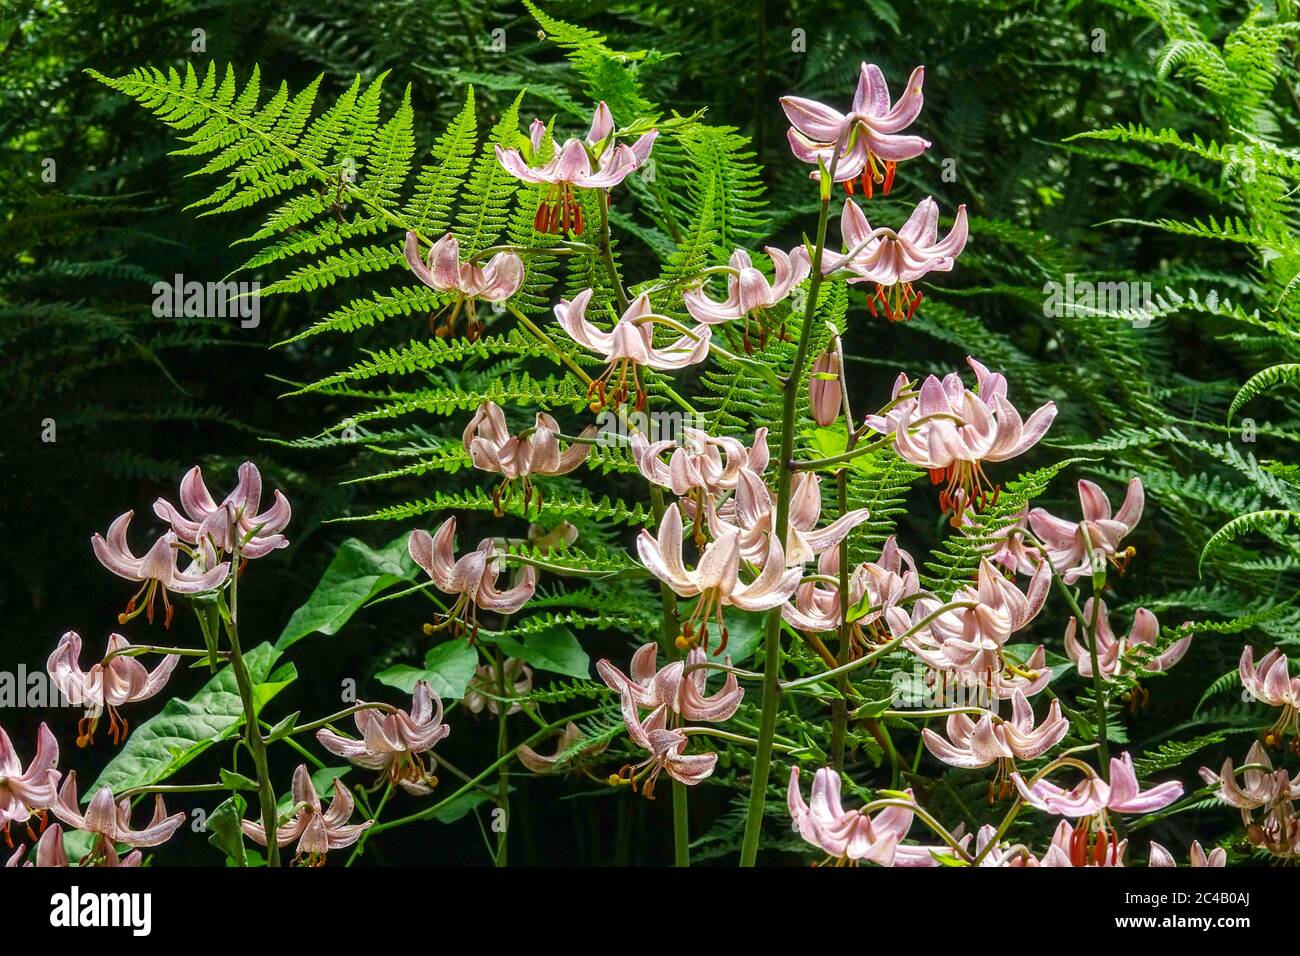 Lilium martagon 'Pink Morning' Turk's Cap Lily fern Stock Photo